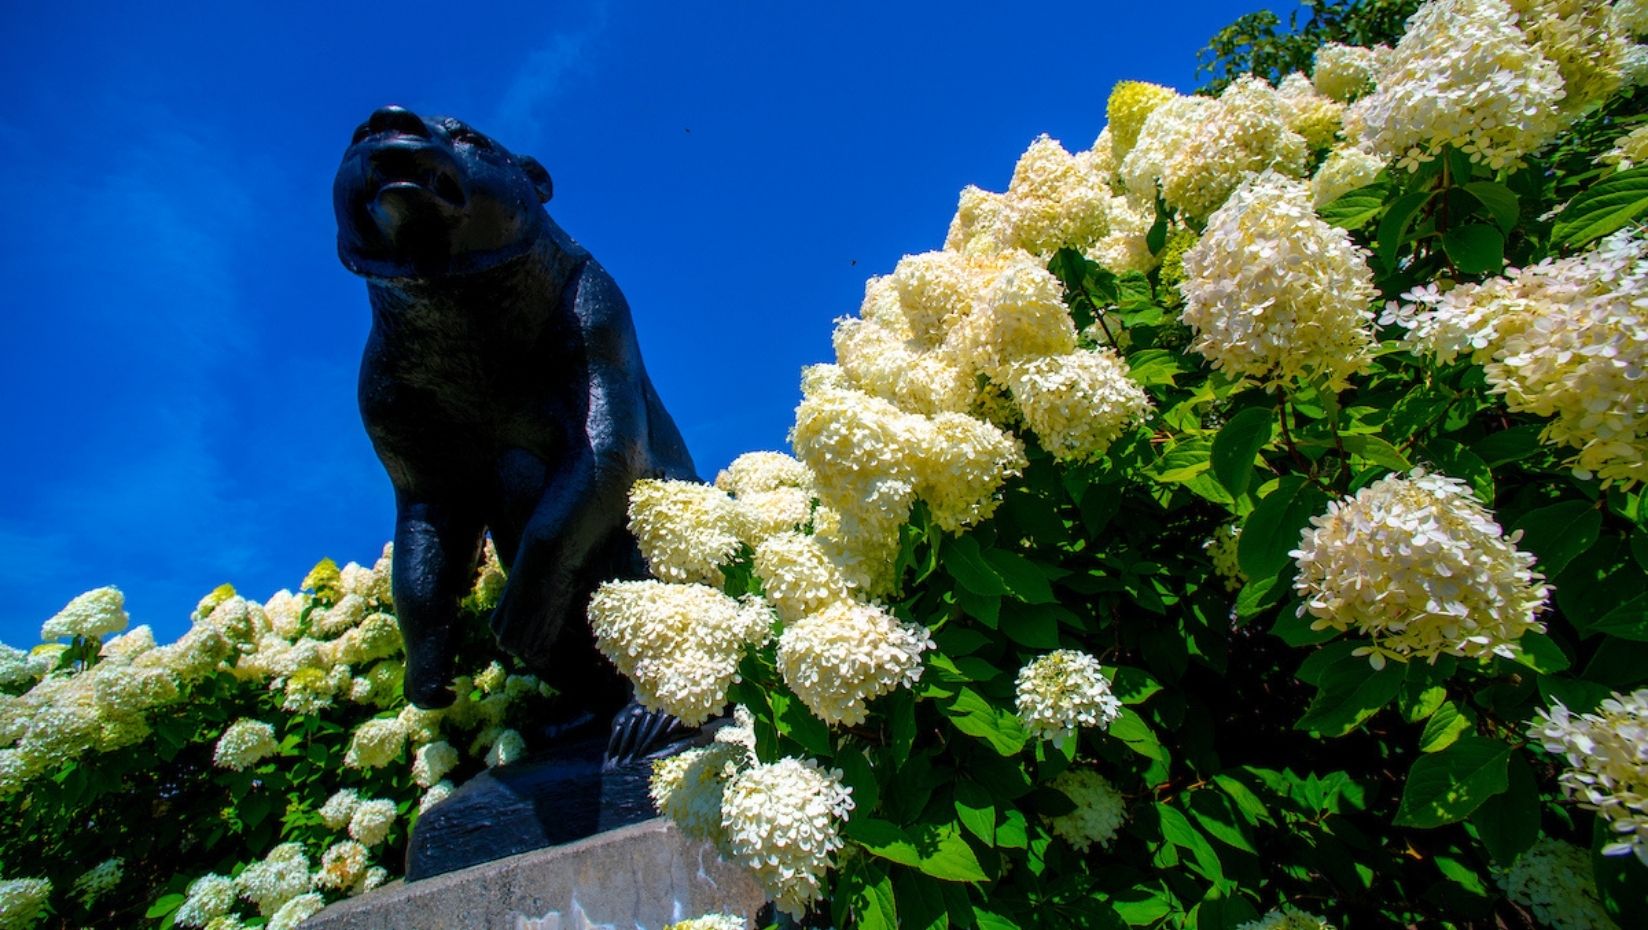 image of black bear statue